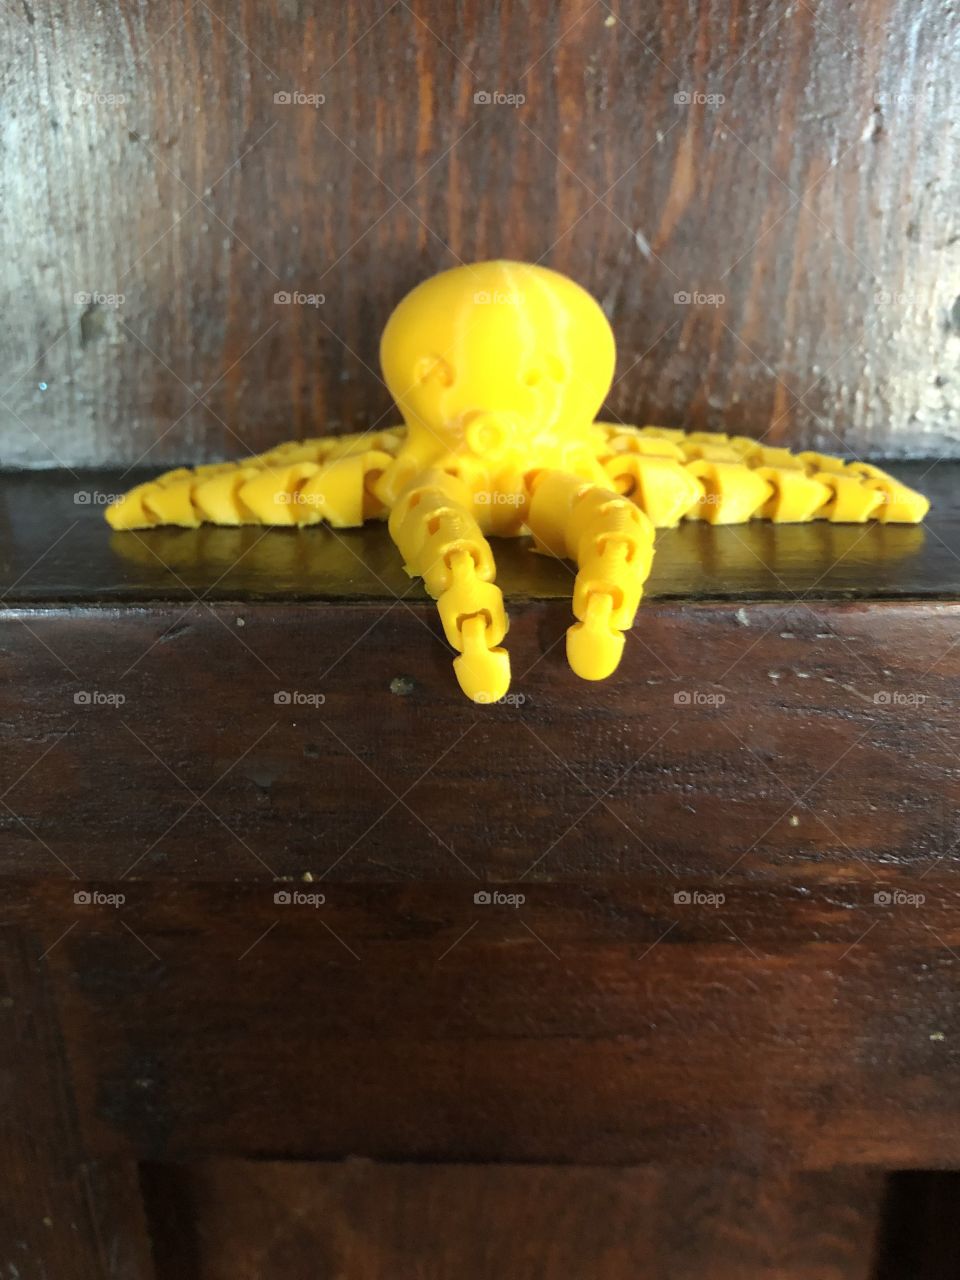 3D printed Octopus 